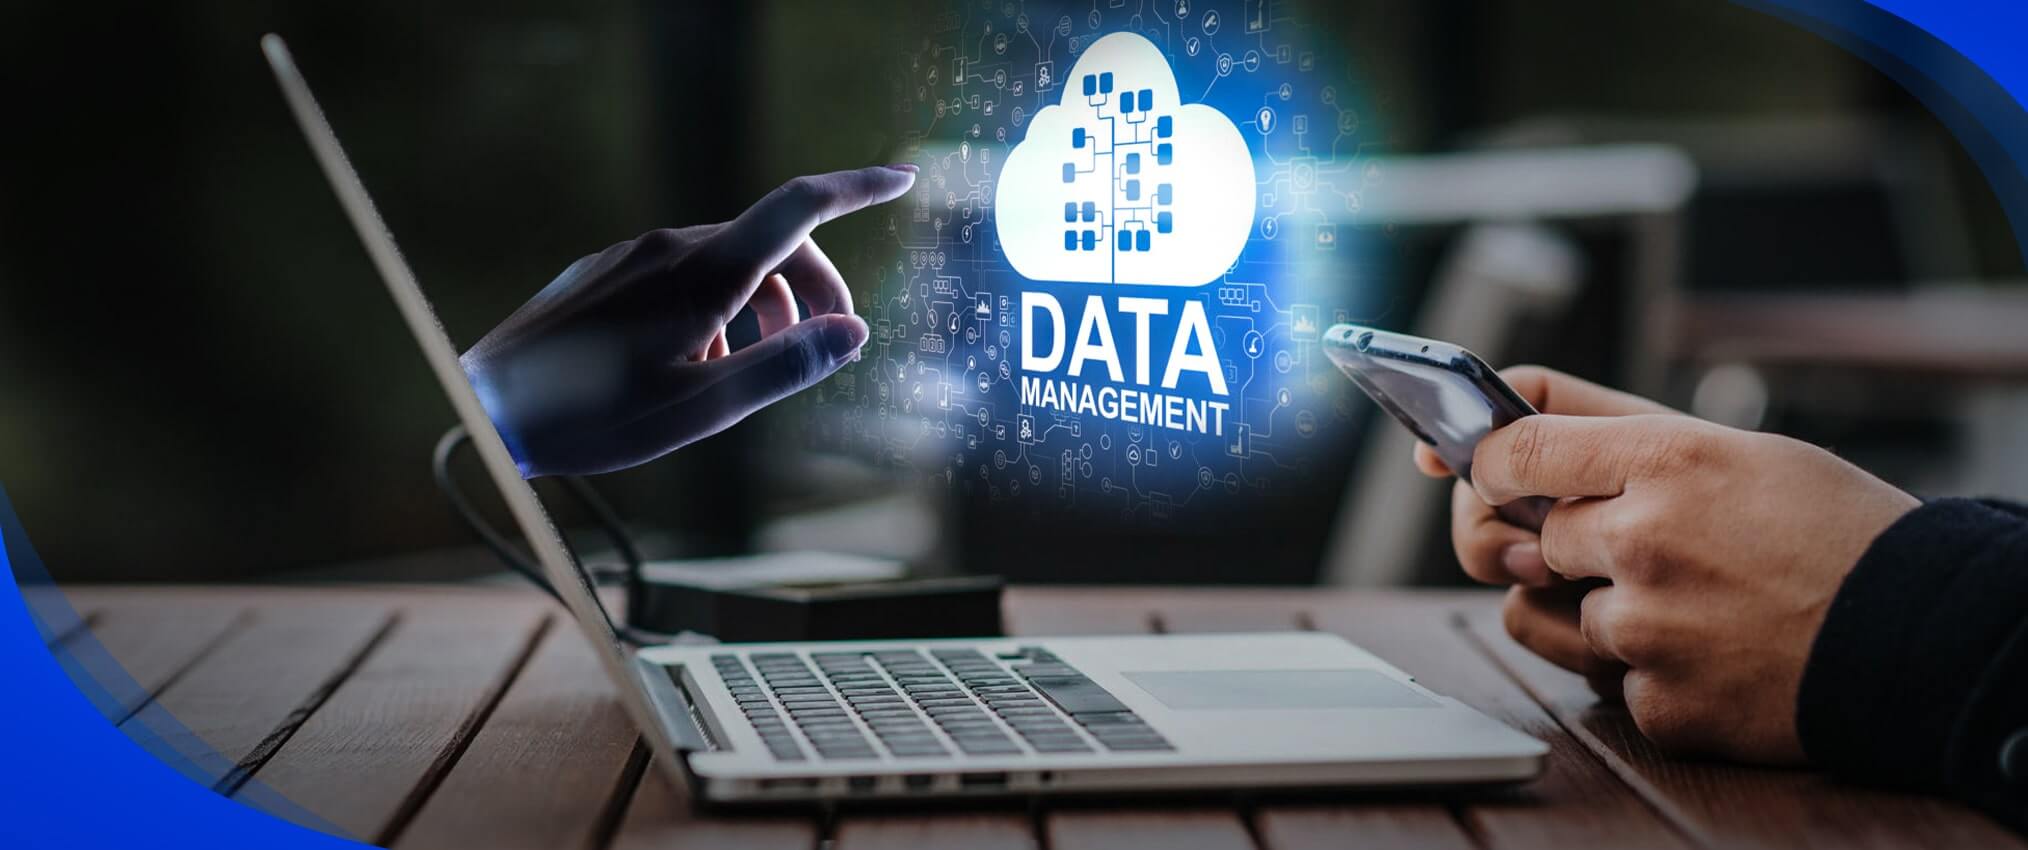 Business Data Management -Ways of Managing Vital Business Data